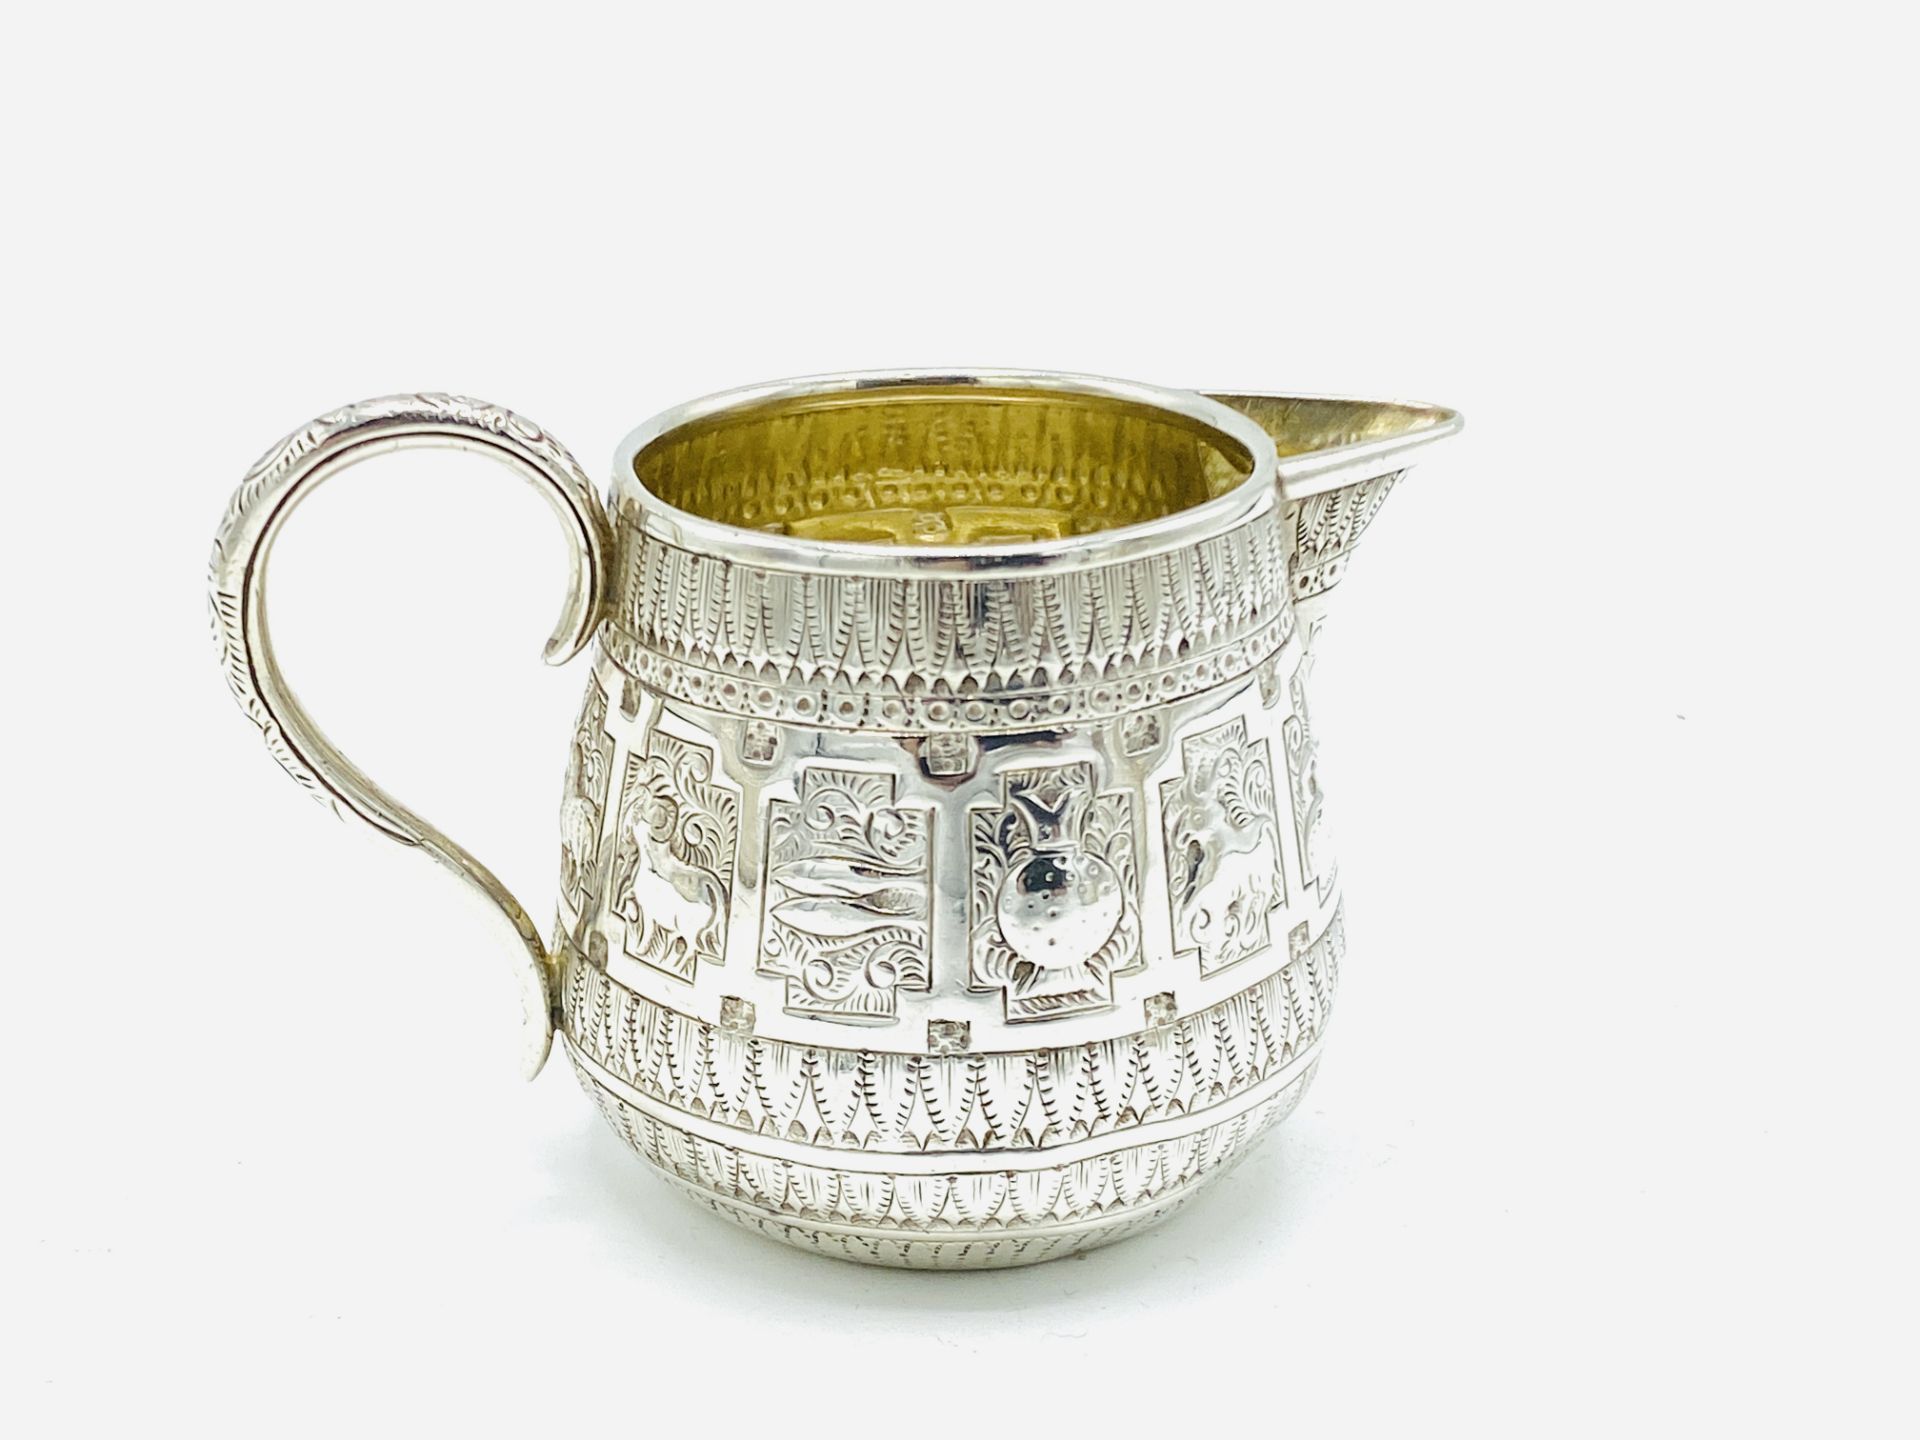 Scottish silver tea service by Hamilton & Inches, hallmarked Edinburgh 1877 - Image 3 of 7